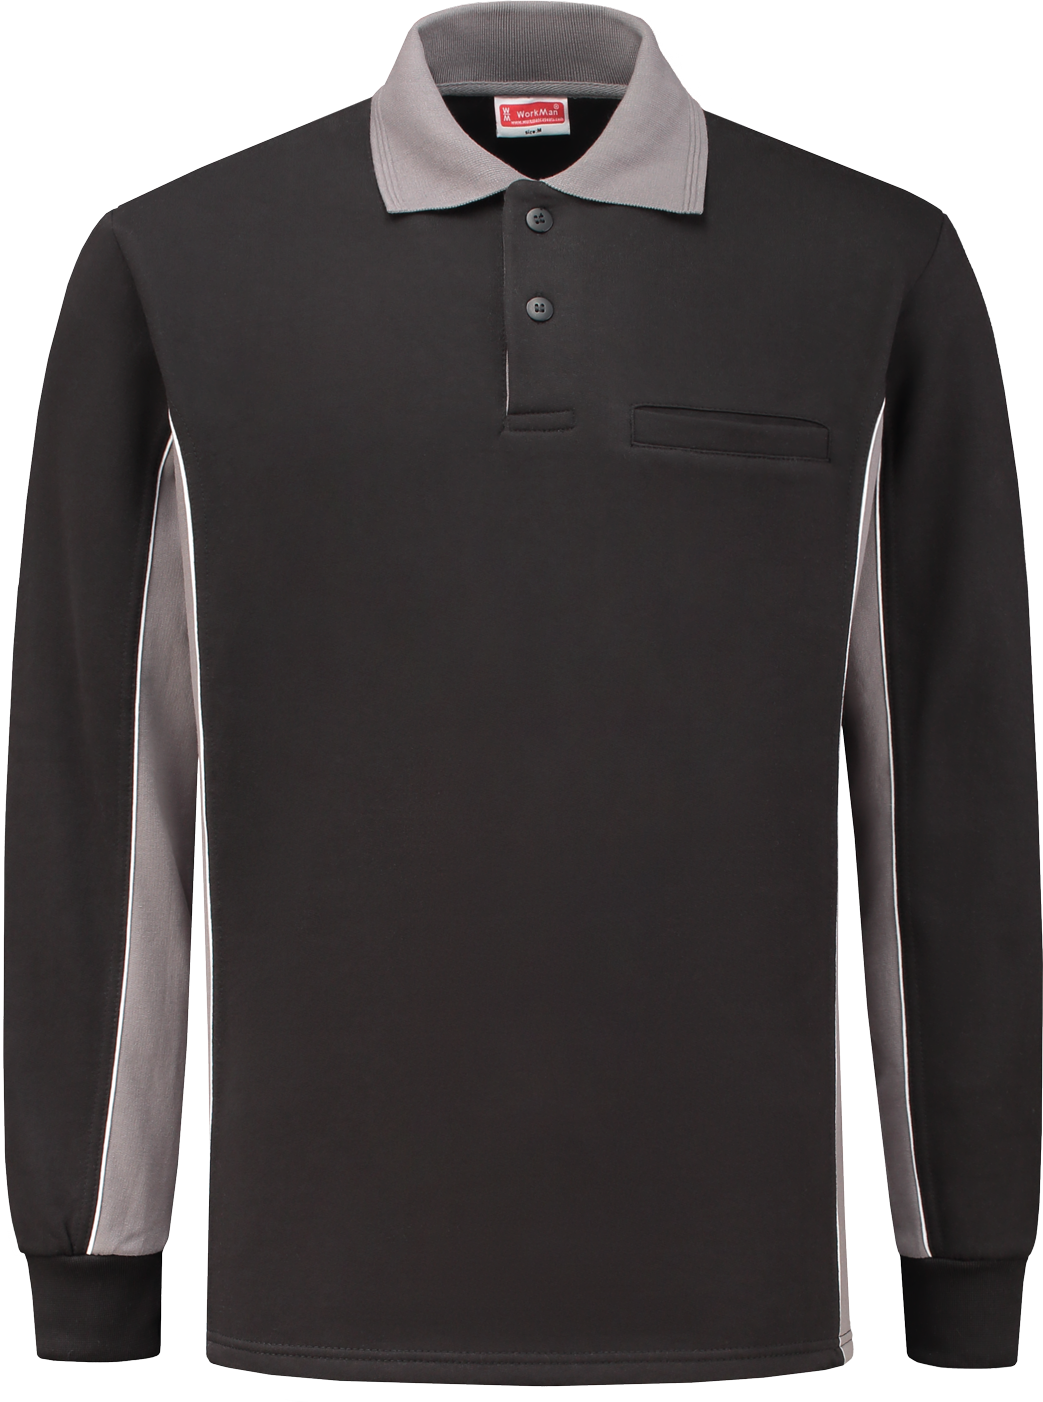 2406 Polosweater Bi-Colour Black / Grey